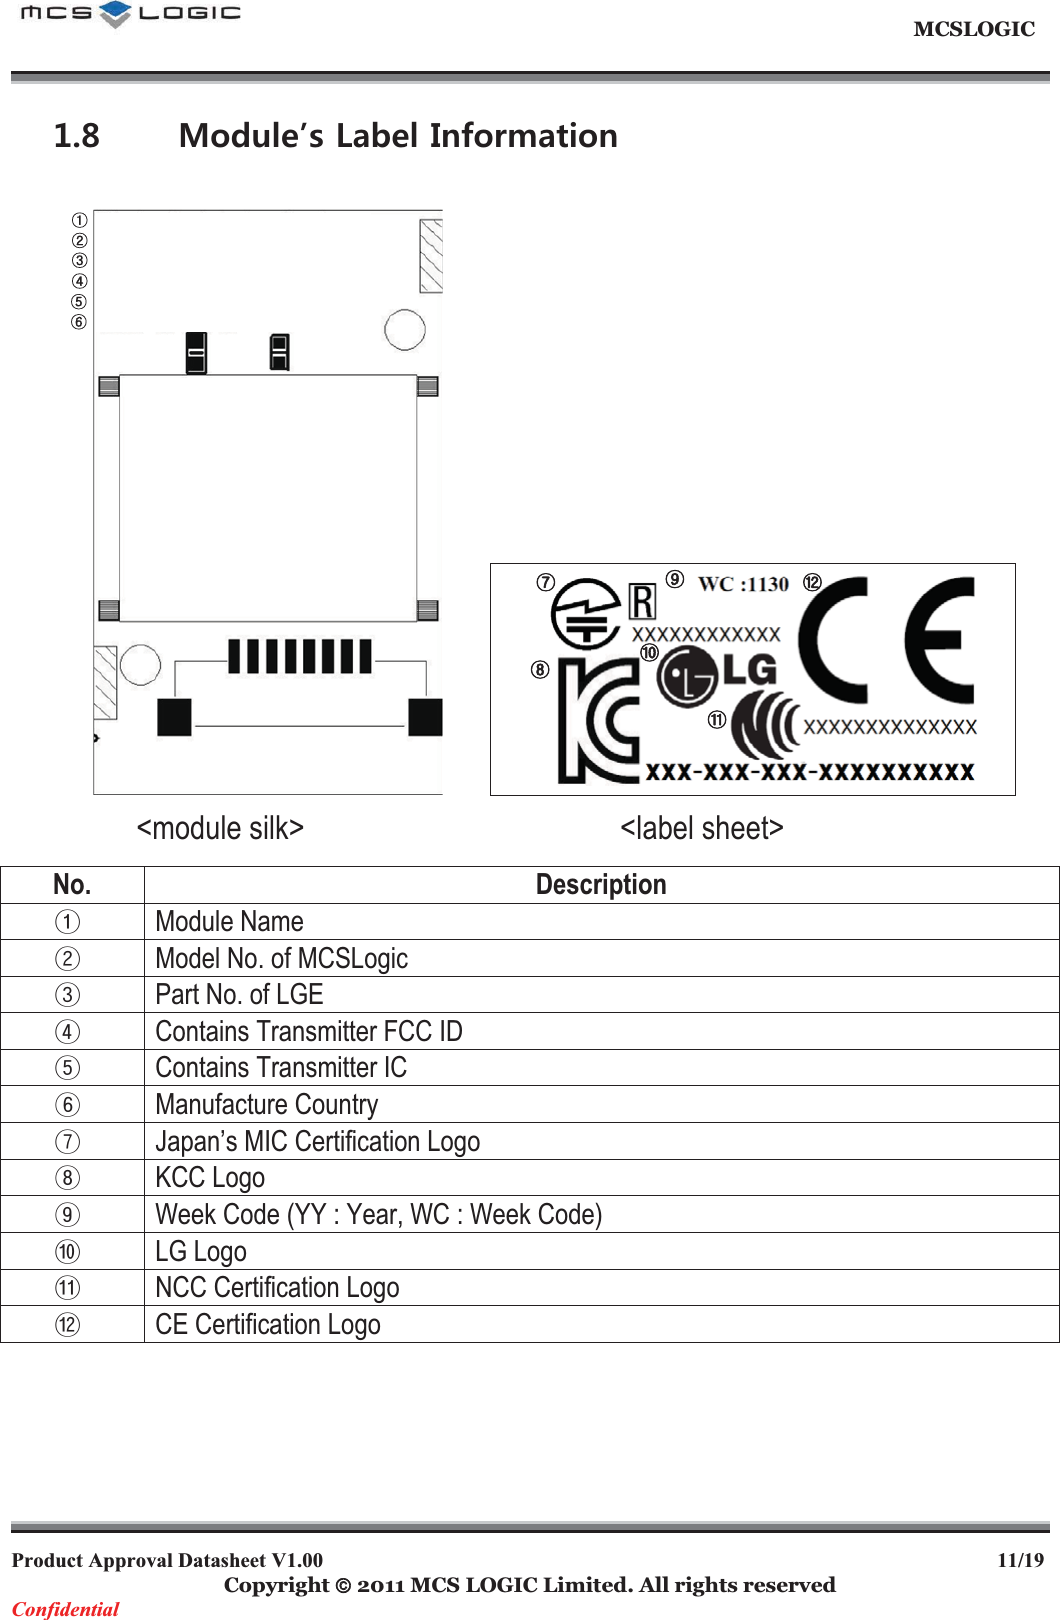 ͑͑͑͑͑͑͑͑͑͑͑͑͑͑͑͑͑͑͑͑͑͑͑͑͑͑͑͑͑͑͑͑͑͑͑͑͑͑͑͑͑͑͑͑͑͑͑͑͑͑͑͑͑͑͑͑͑͑MCSLOGIC                                                                                     Product Approval Datasheet V1.00                                                                  11/19 Copyright ¤¤ 2011 MCS LOGIC Limited. All rights reserved Confidential  /QFWNGğU.CDGN+PHQTOCVKQP ྙྚྛྜྜྷྞ    ྟྠྡྡྷྣྤ &lt;module silk&gt;                   &lt;label sheet&gt; No. Description ᐭ  Module Name ᐮ  Model No. of MCSLogic ᐯ  Part No. of LGE ᐰ  Contains Transmitter FCC ID ᐱ  Contains Transmitter IC ᐲ  Manufacture Country ᐳ  Japan’s MIC Certification Logo ᐴ  KCC Logo ᐵ  Week Code (YY : Year, WC : Week Code) ᐶ  LG Logo ᐷ  NCC Certification Logo ᐸ  CE Certification Logo     